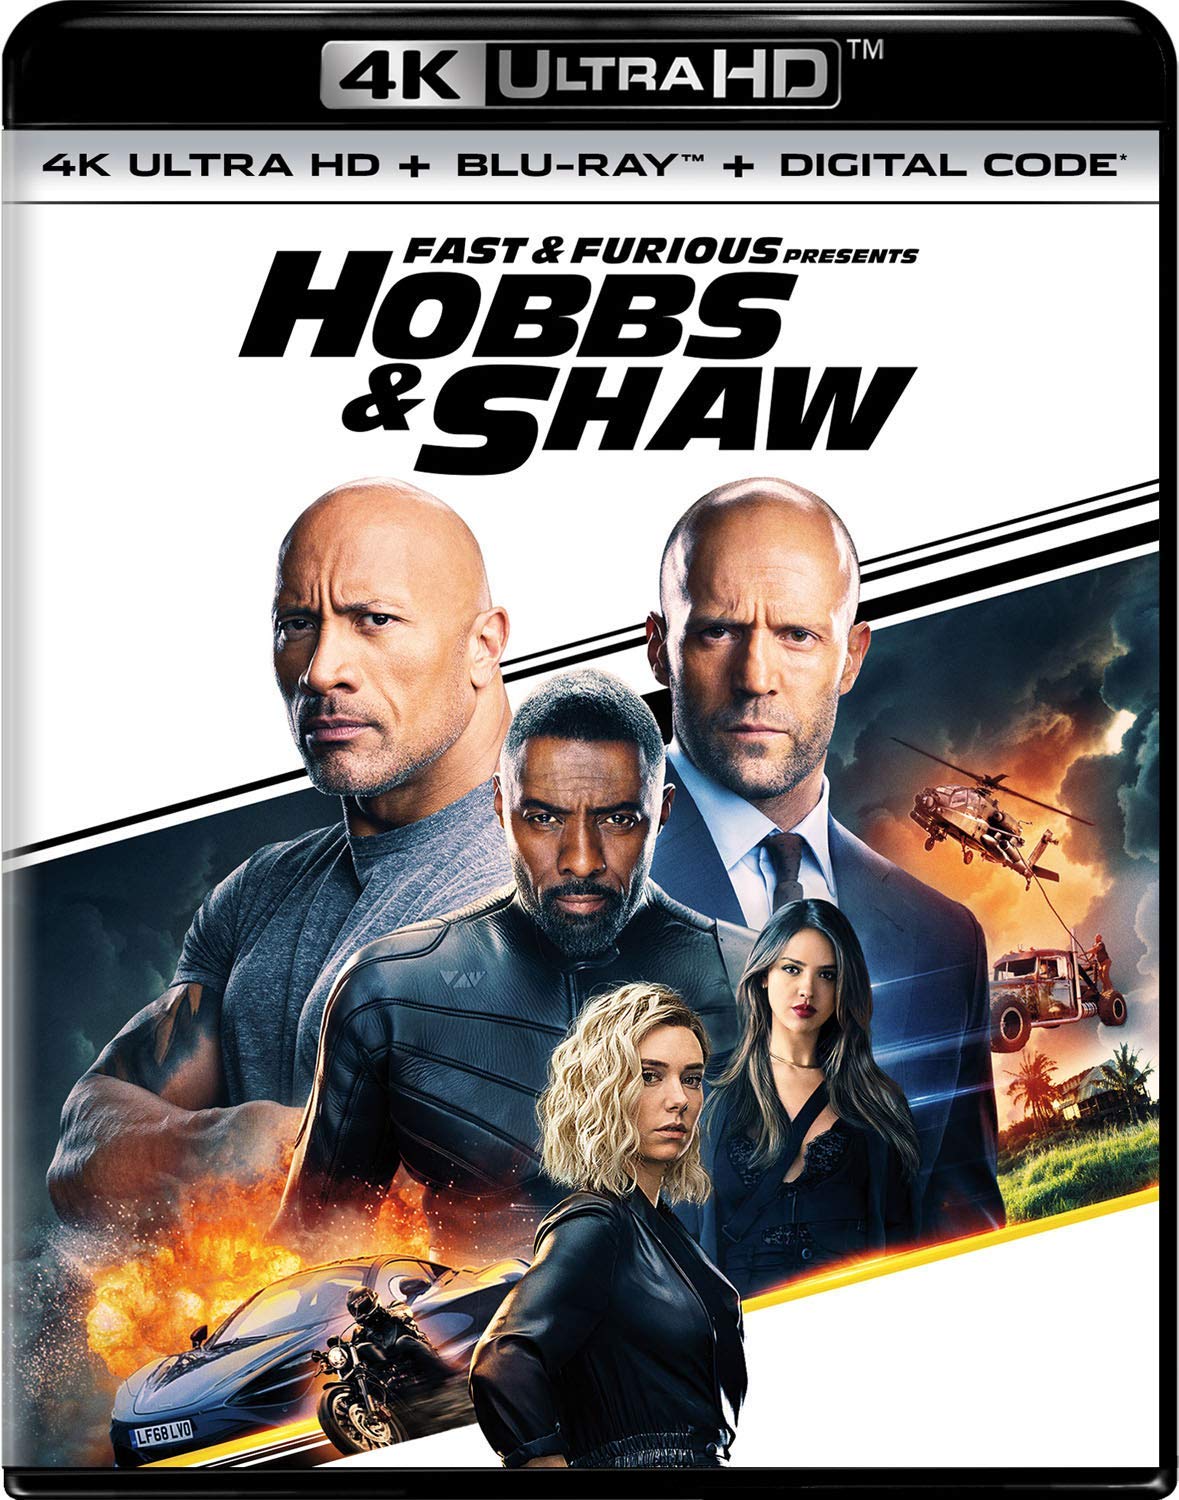 Fast & Furious Presents: Hobbs & Shaw 4K Blu-ray Digital Code